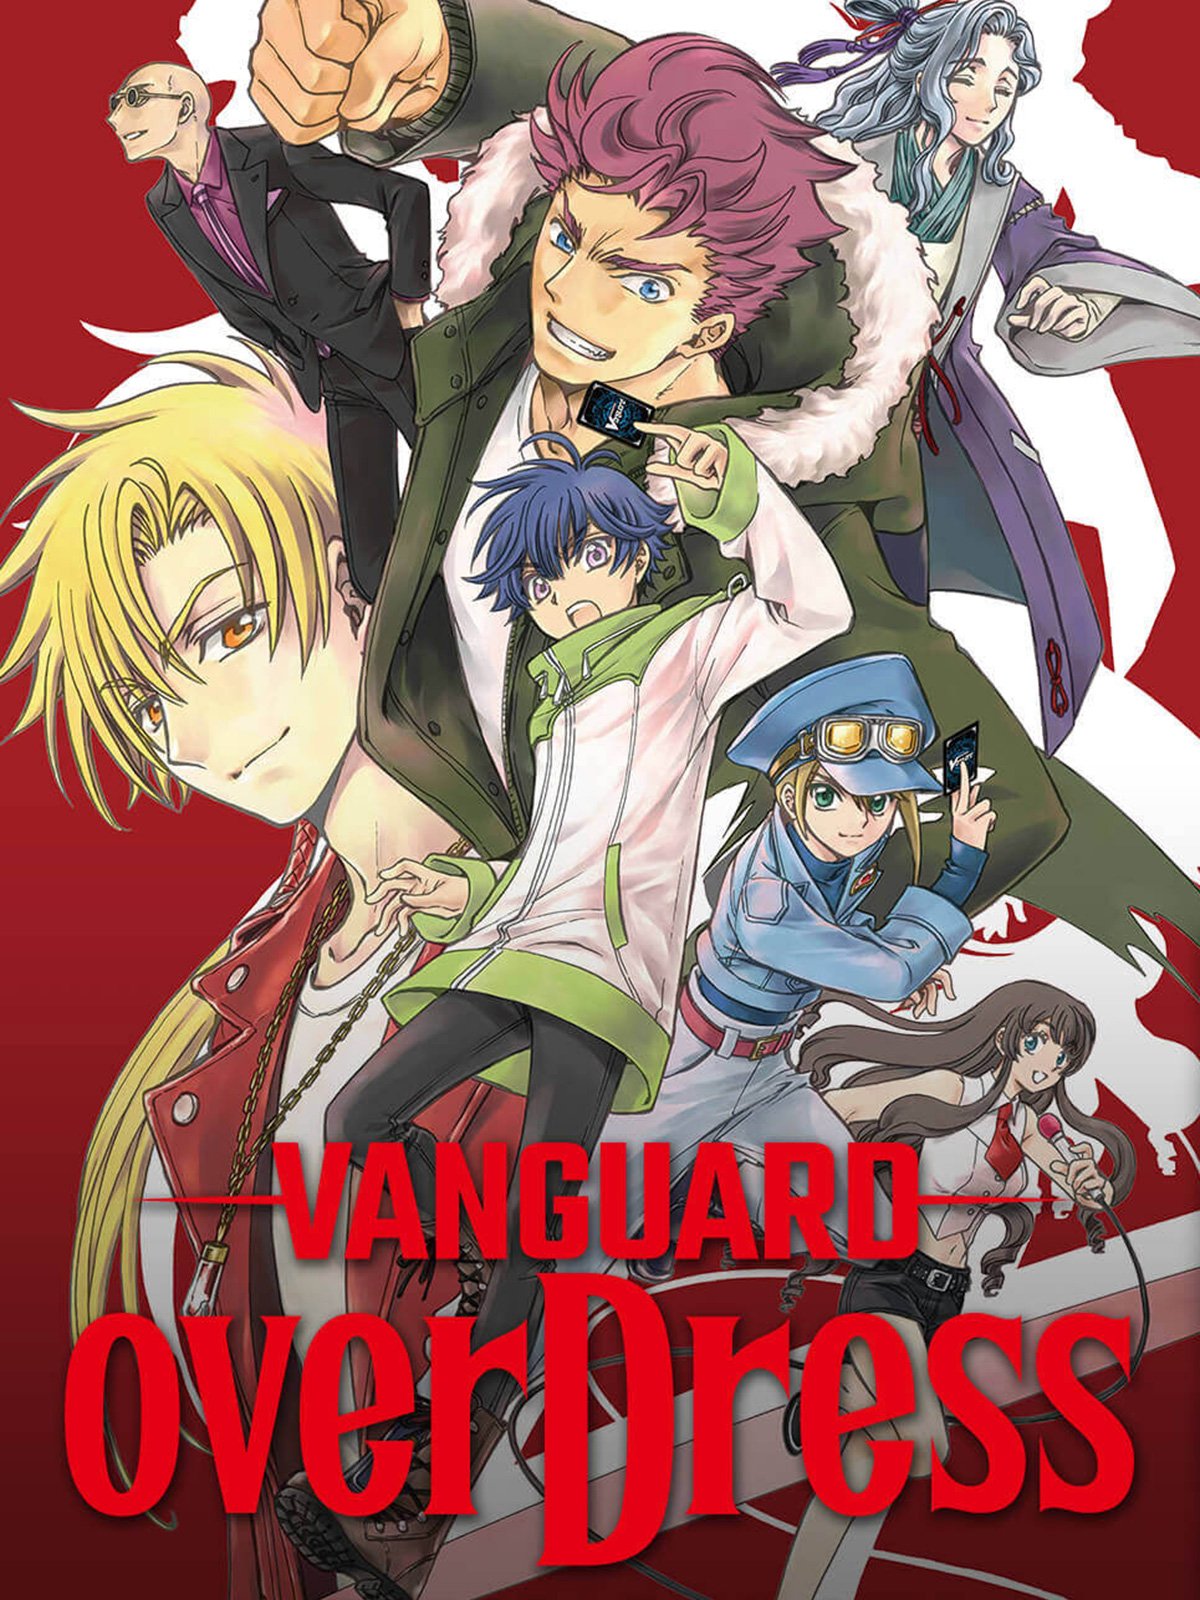 Cardfight!! Vanguard overDress Serie 2021